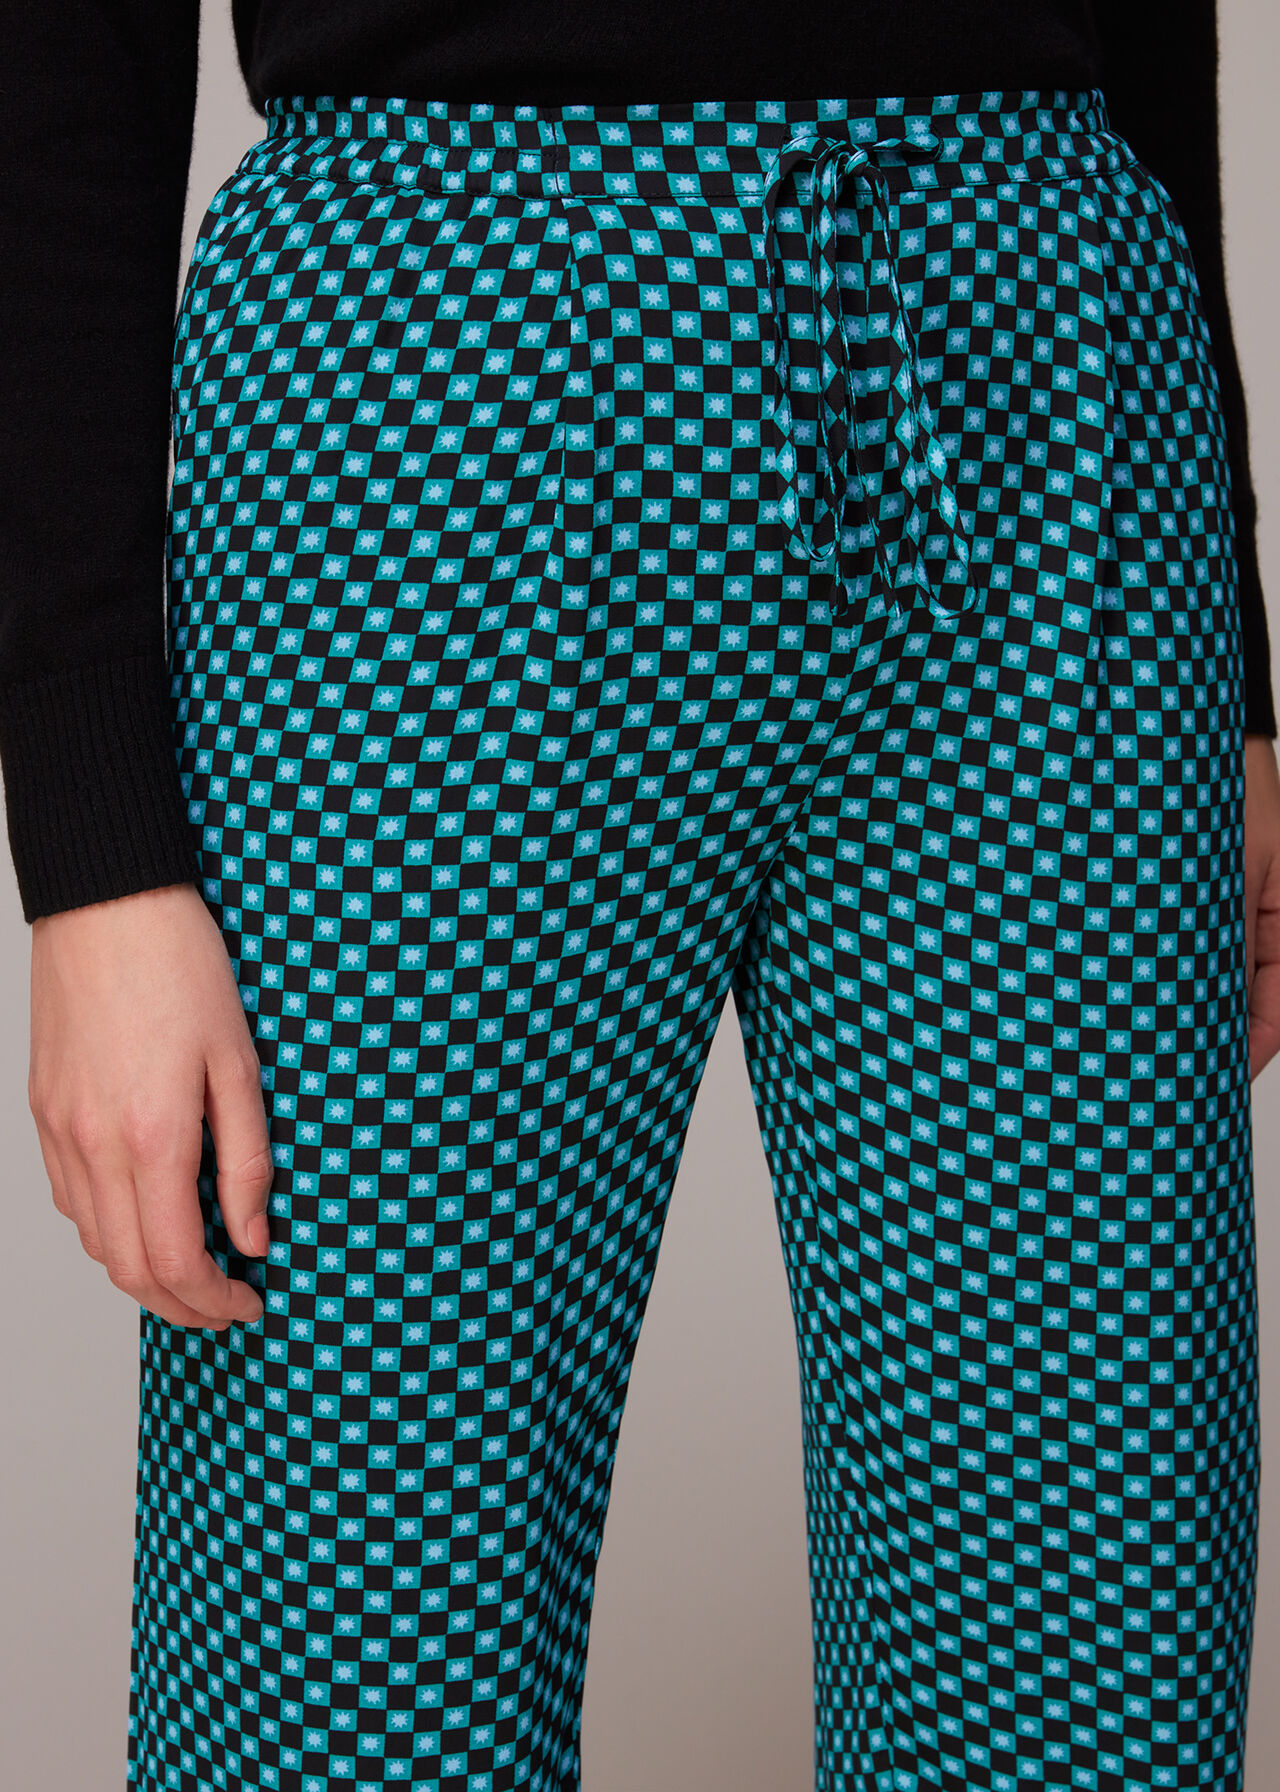 Pippa Star Check Print Trouser